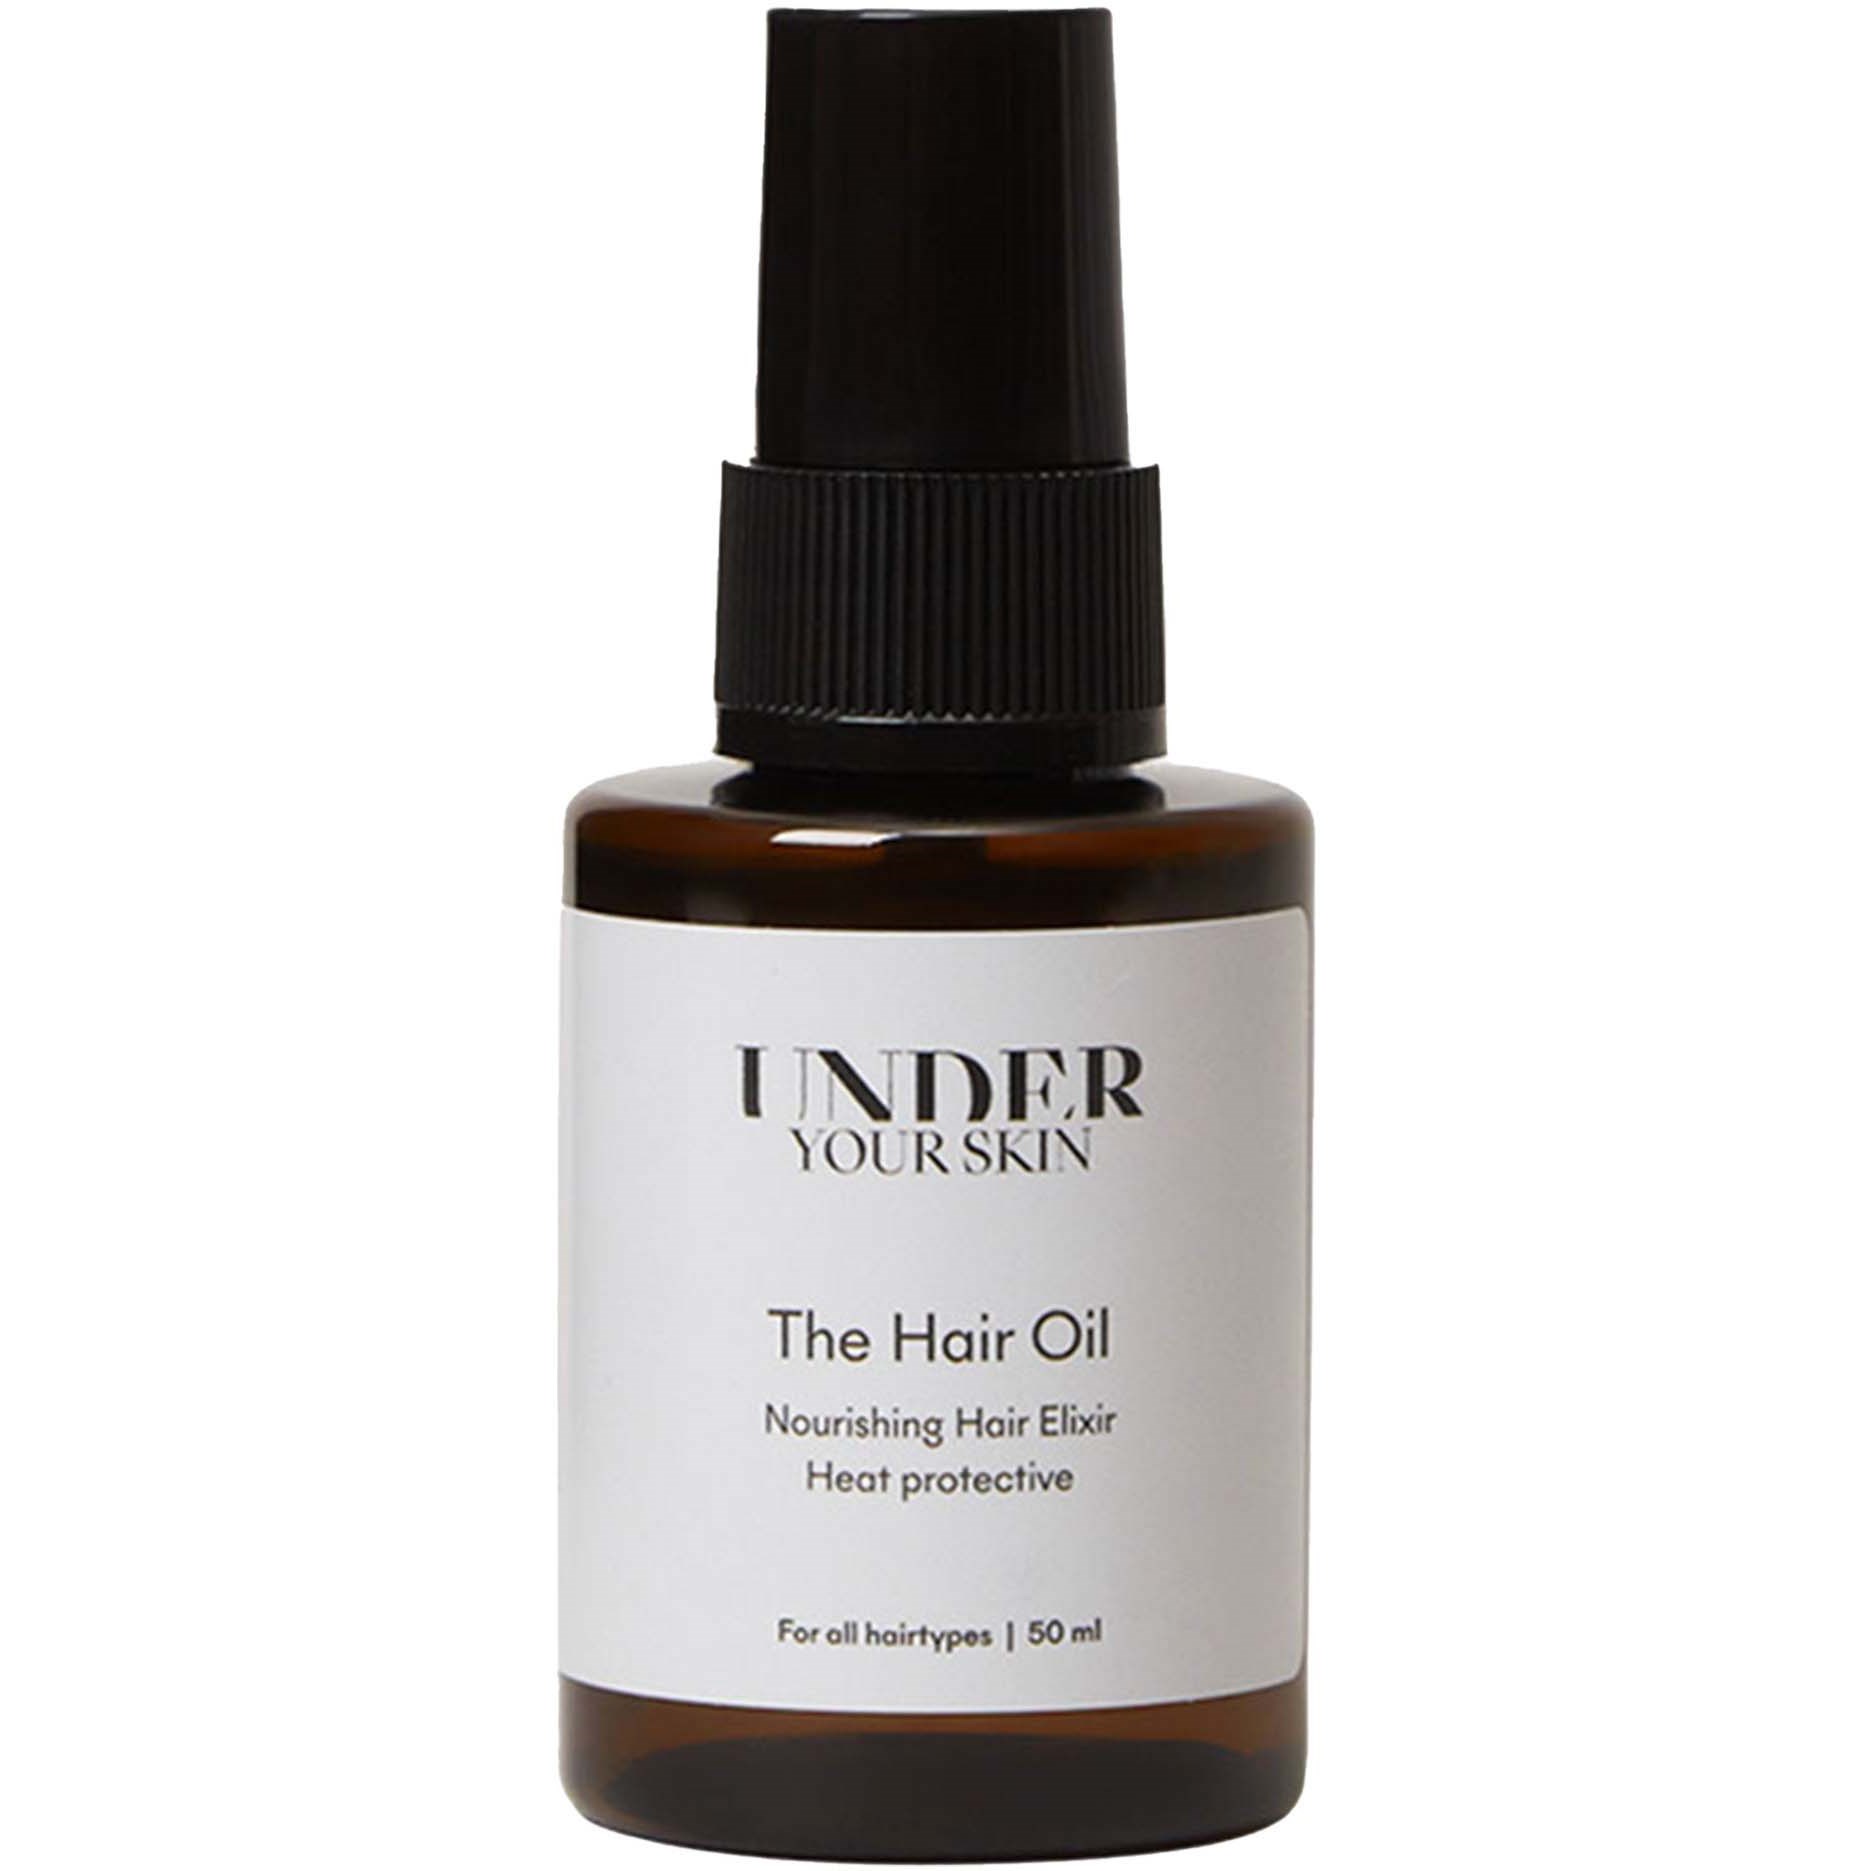 Under Your Skin Hair Oil 50ml 50 ml